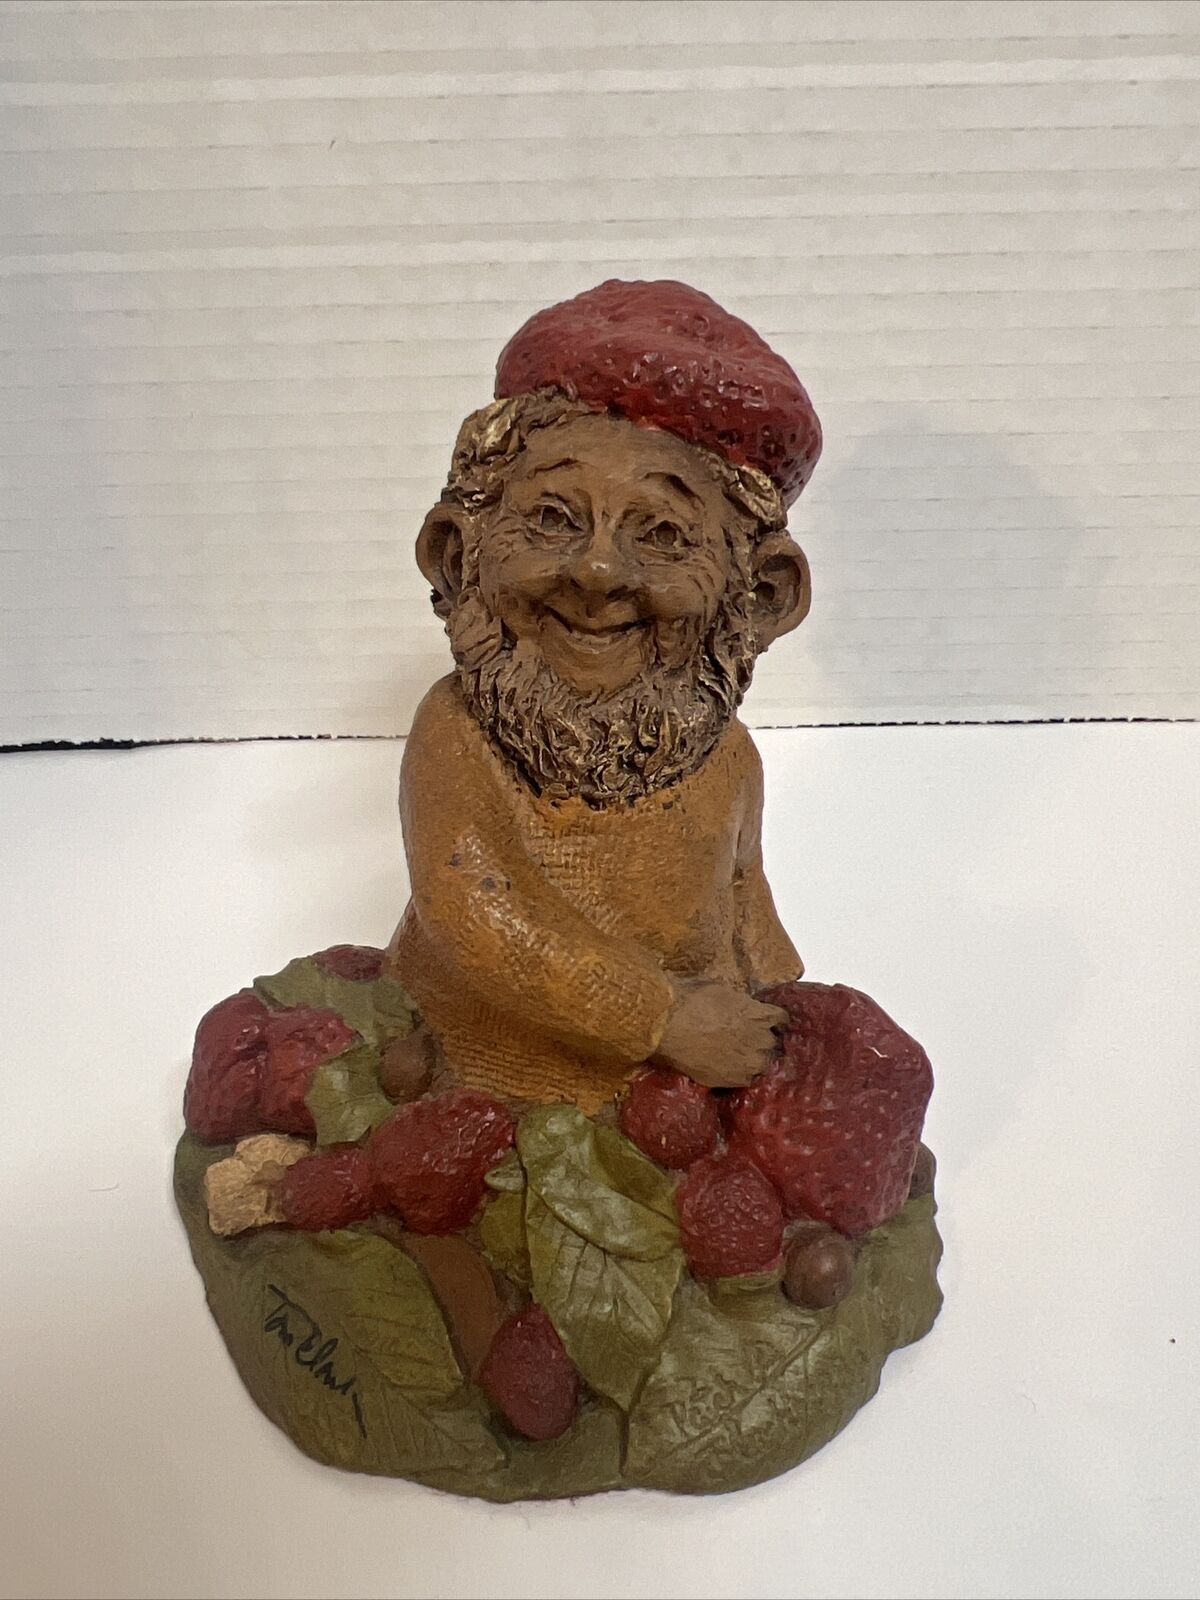 VTG 1983 Tom Clark Resin Gnome Figurine “PATCH” Strawberries~#69 (B-1)